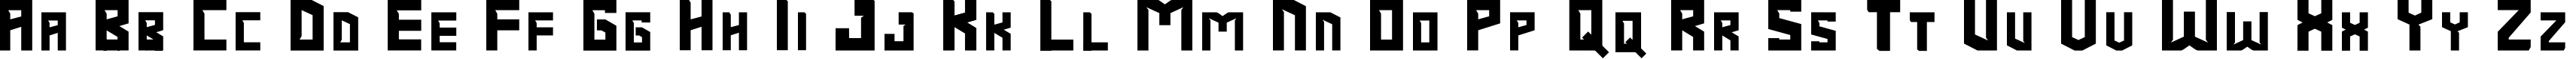 Пример написания английского алфавита шрифтом Braize-Demo